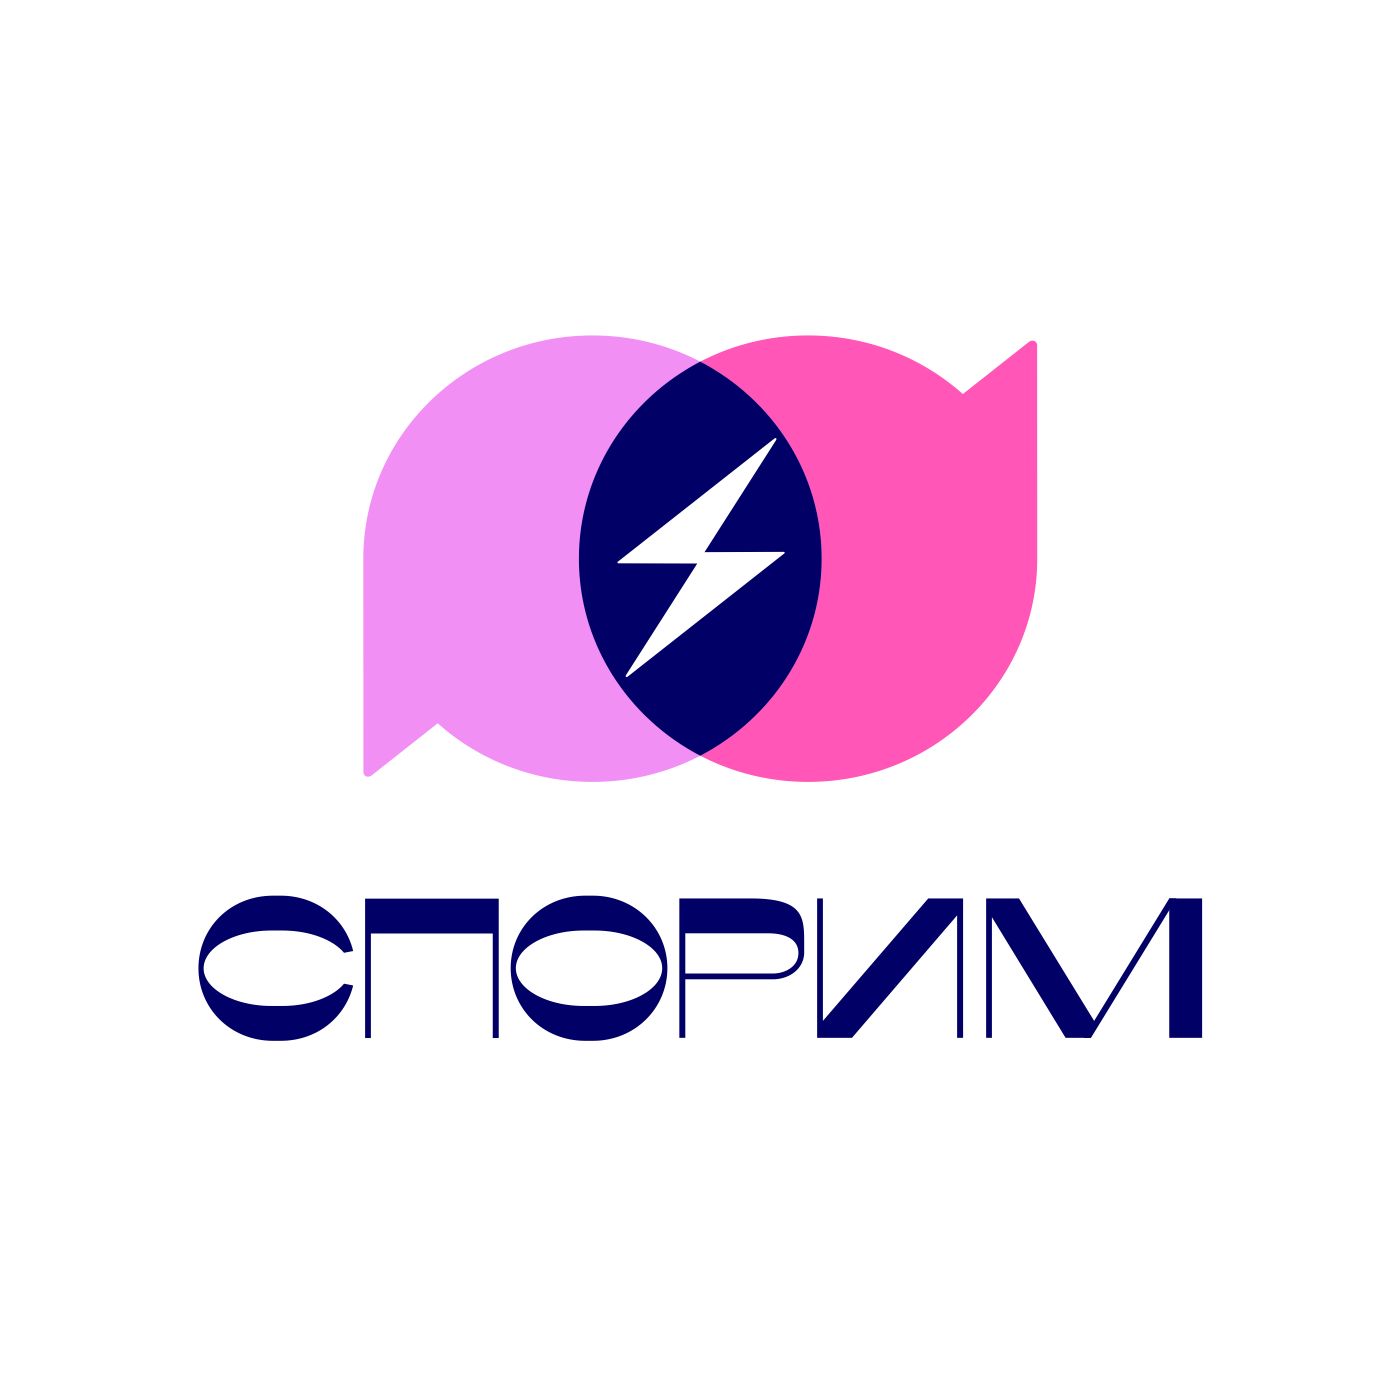 Разработка логотипа за 10 000 руб.